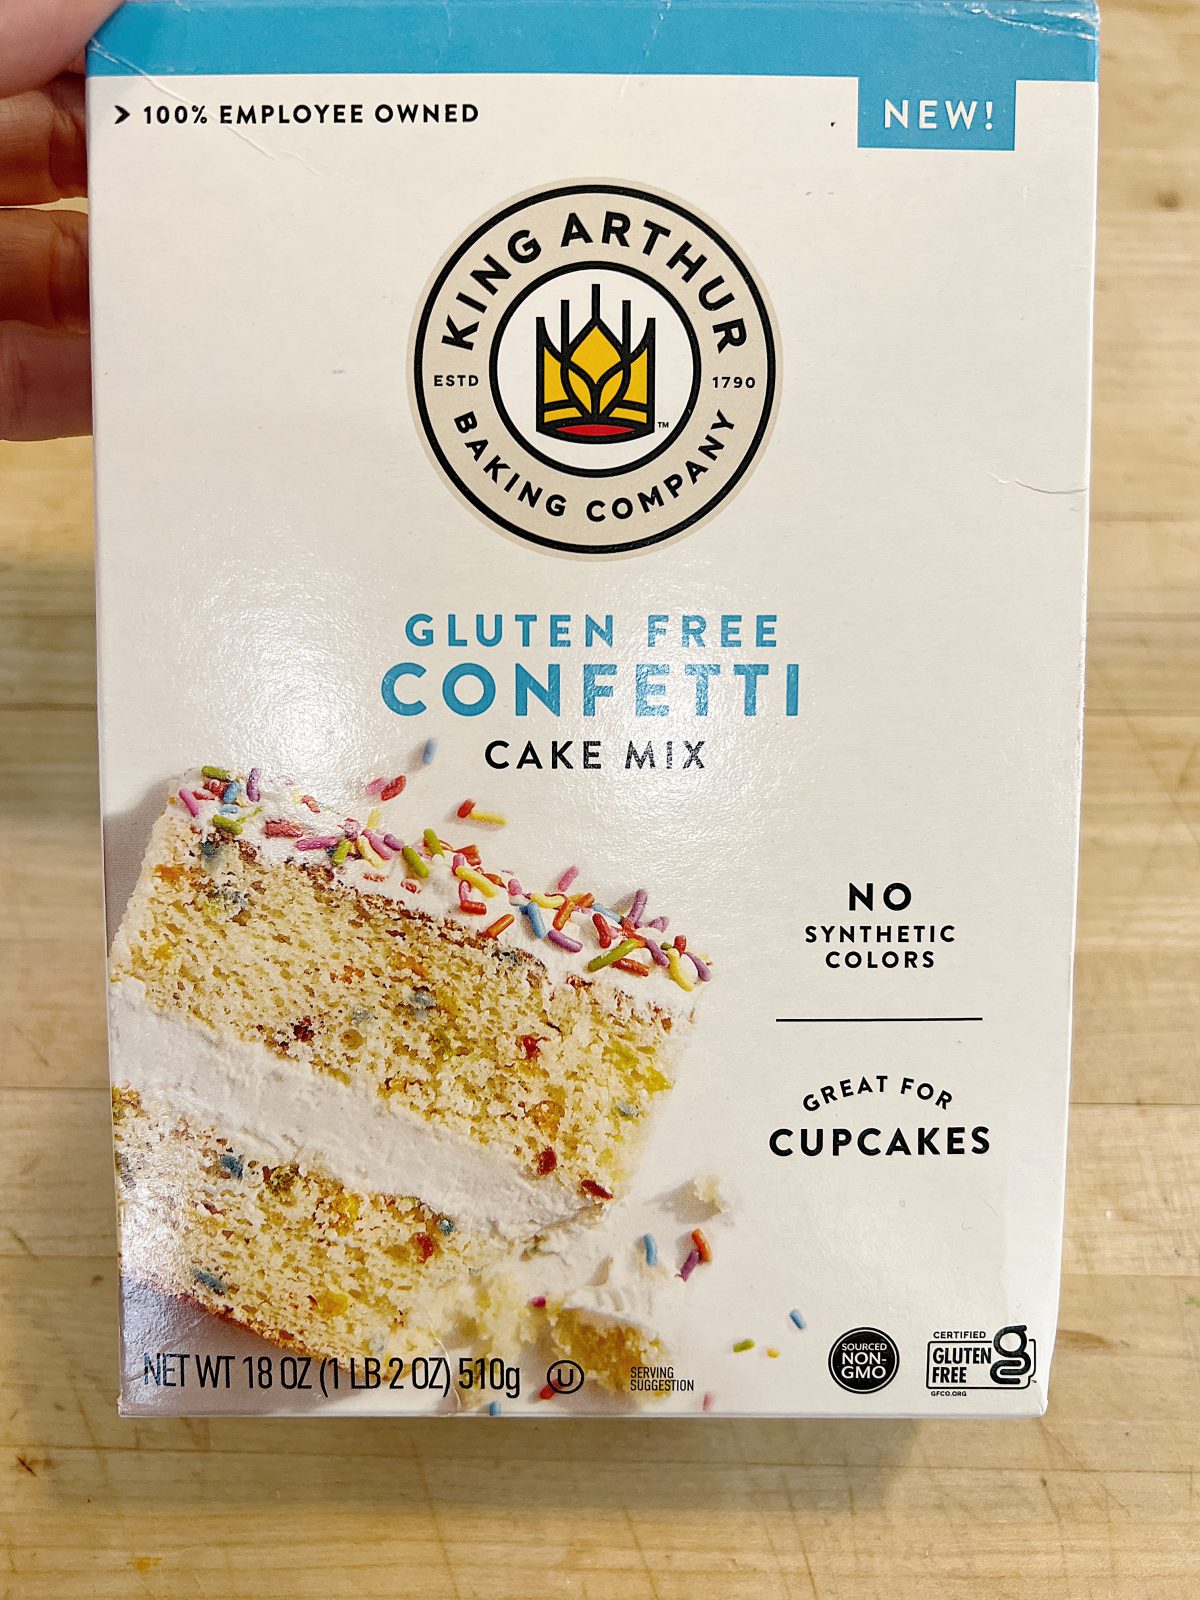 https://my100yearoldhome.com/wp-content/uploads/2022/05/Make-a-Gluten-Free-Cake.jpg